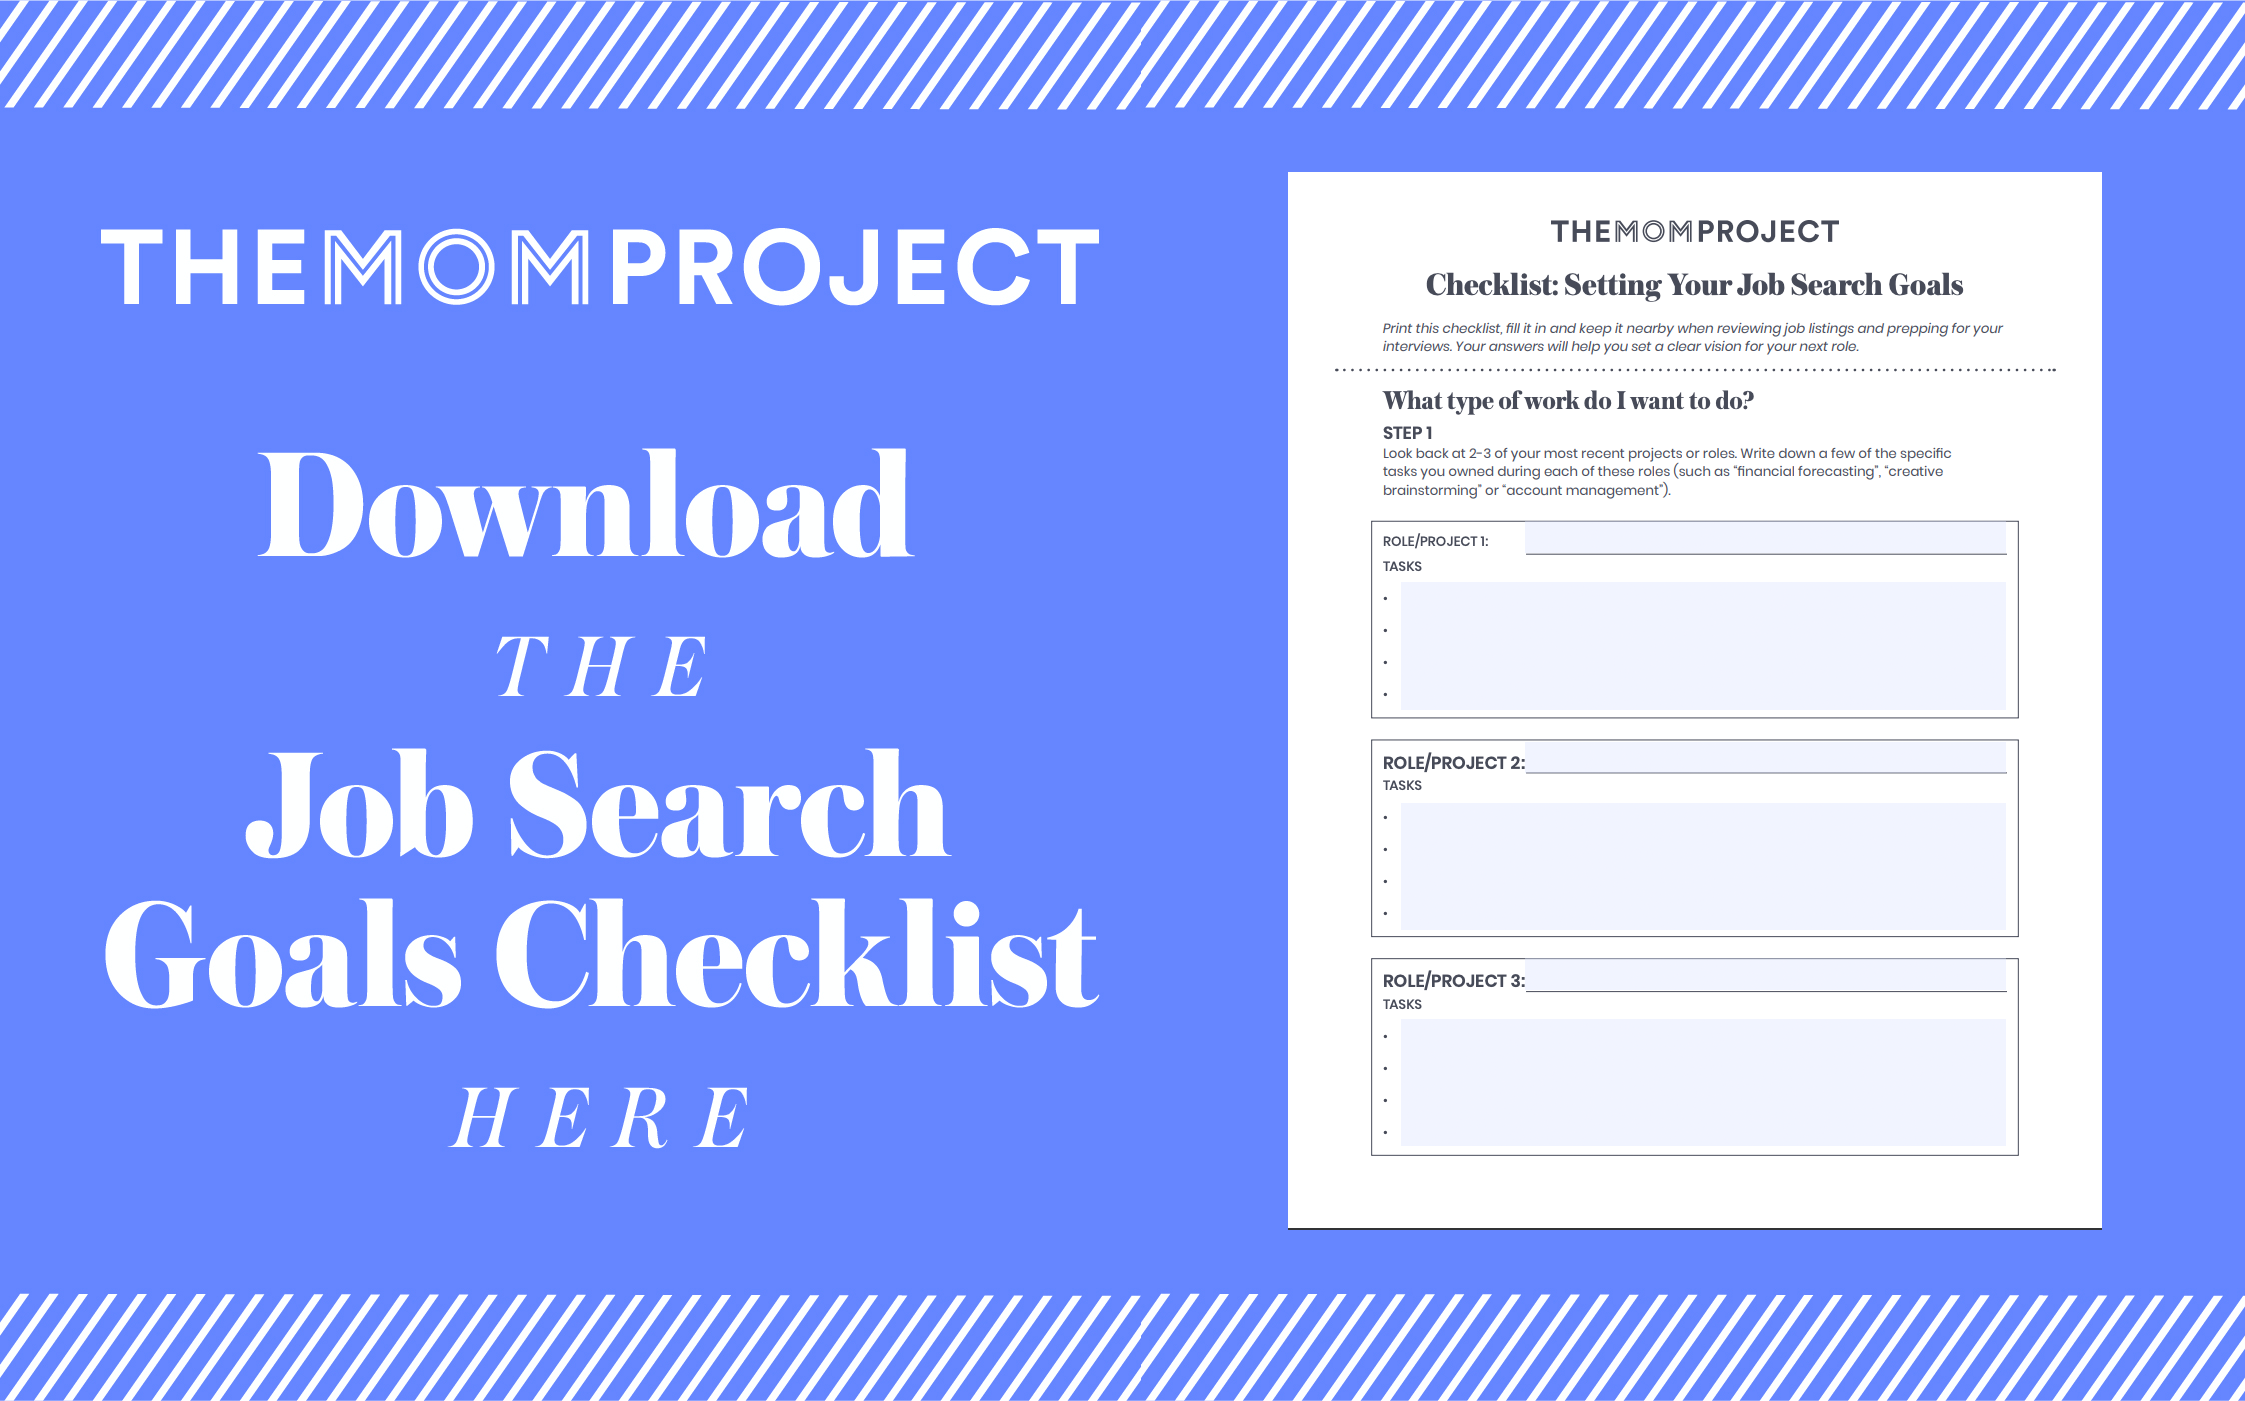 Download the Job Search Goals Checklist